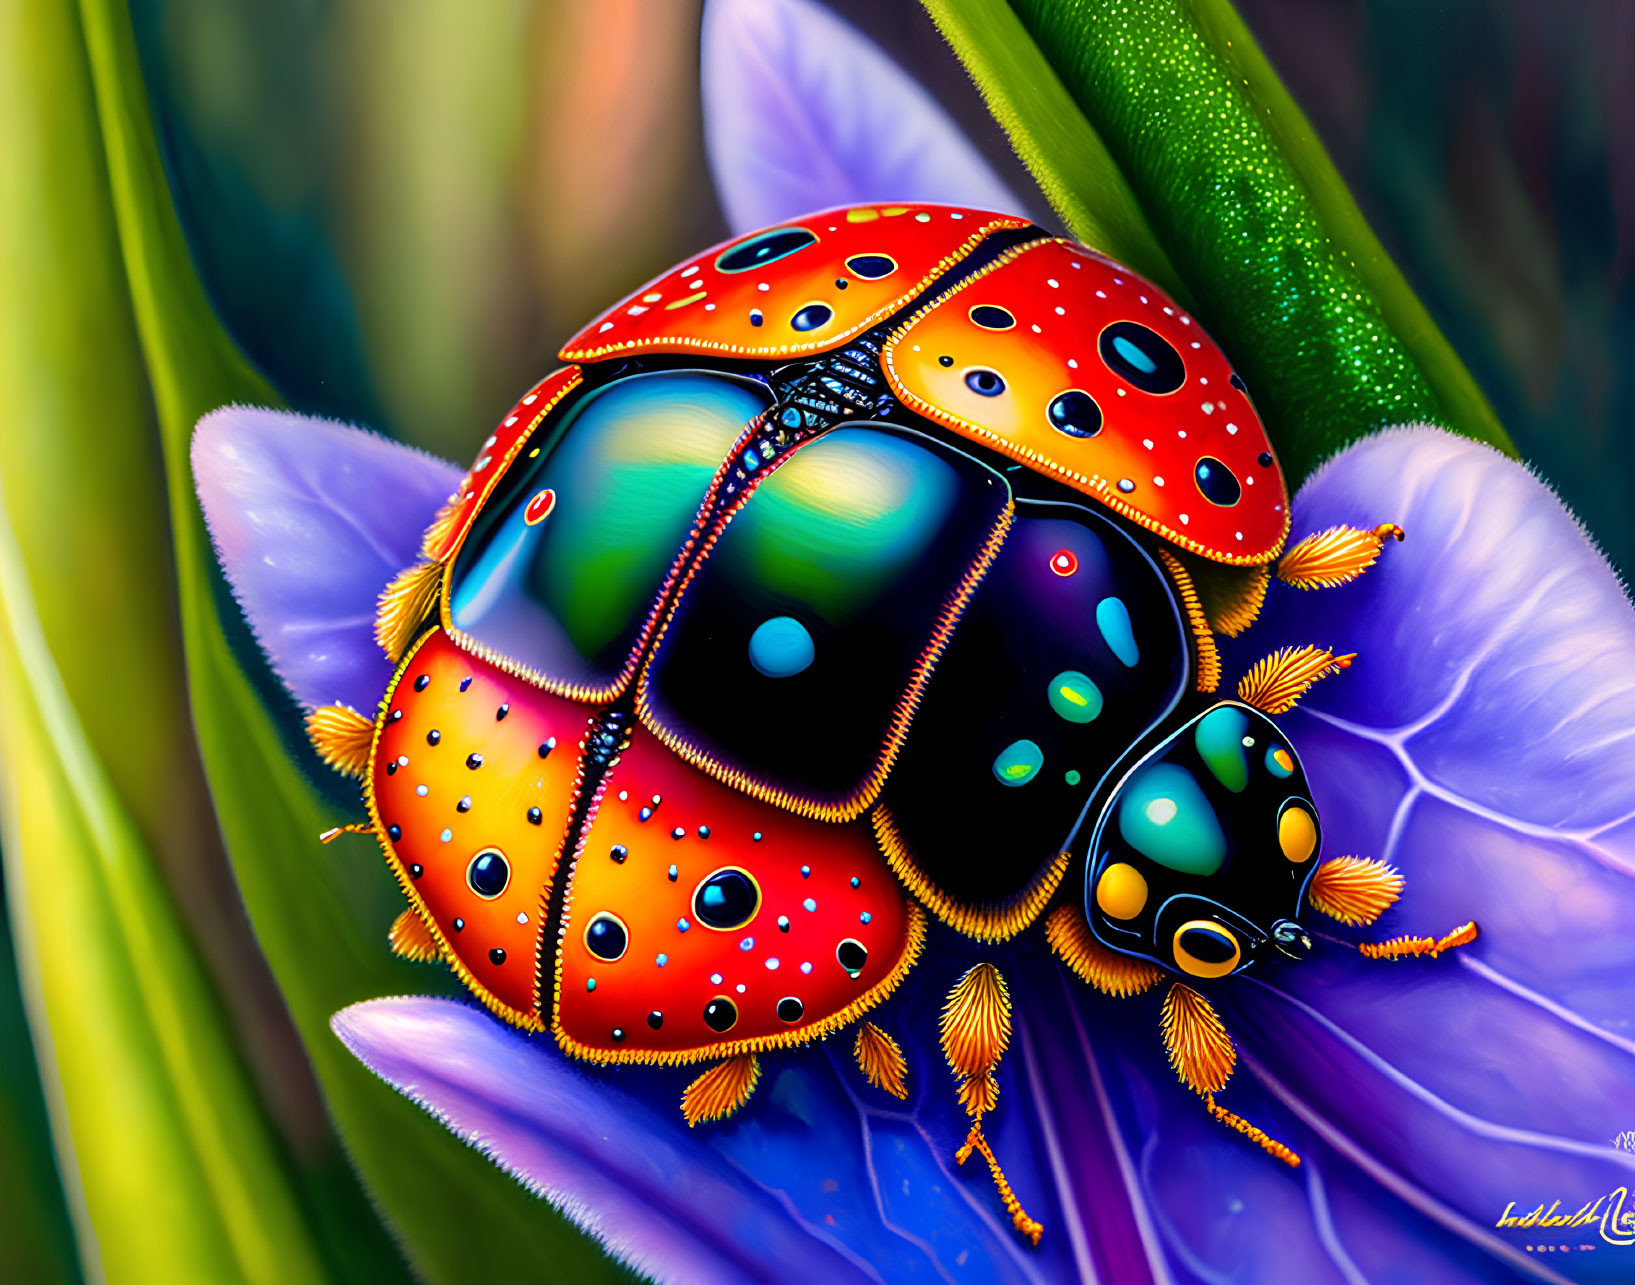 Vibrant Digital Art: Ladybug on Purple Flower with Intricate Patterns